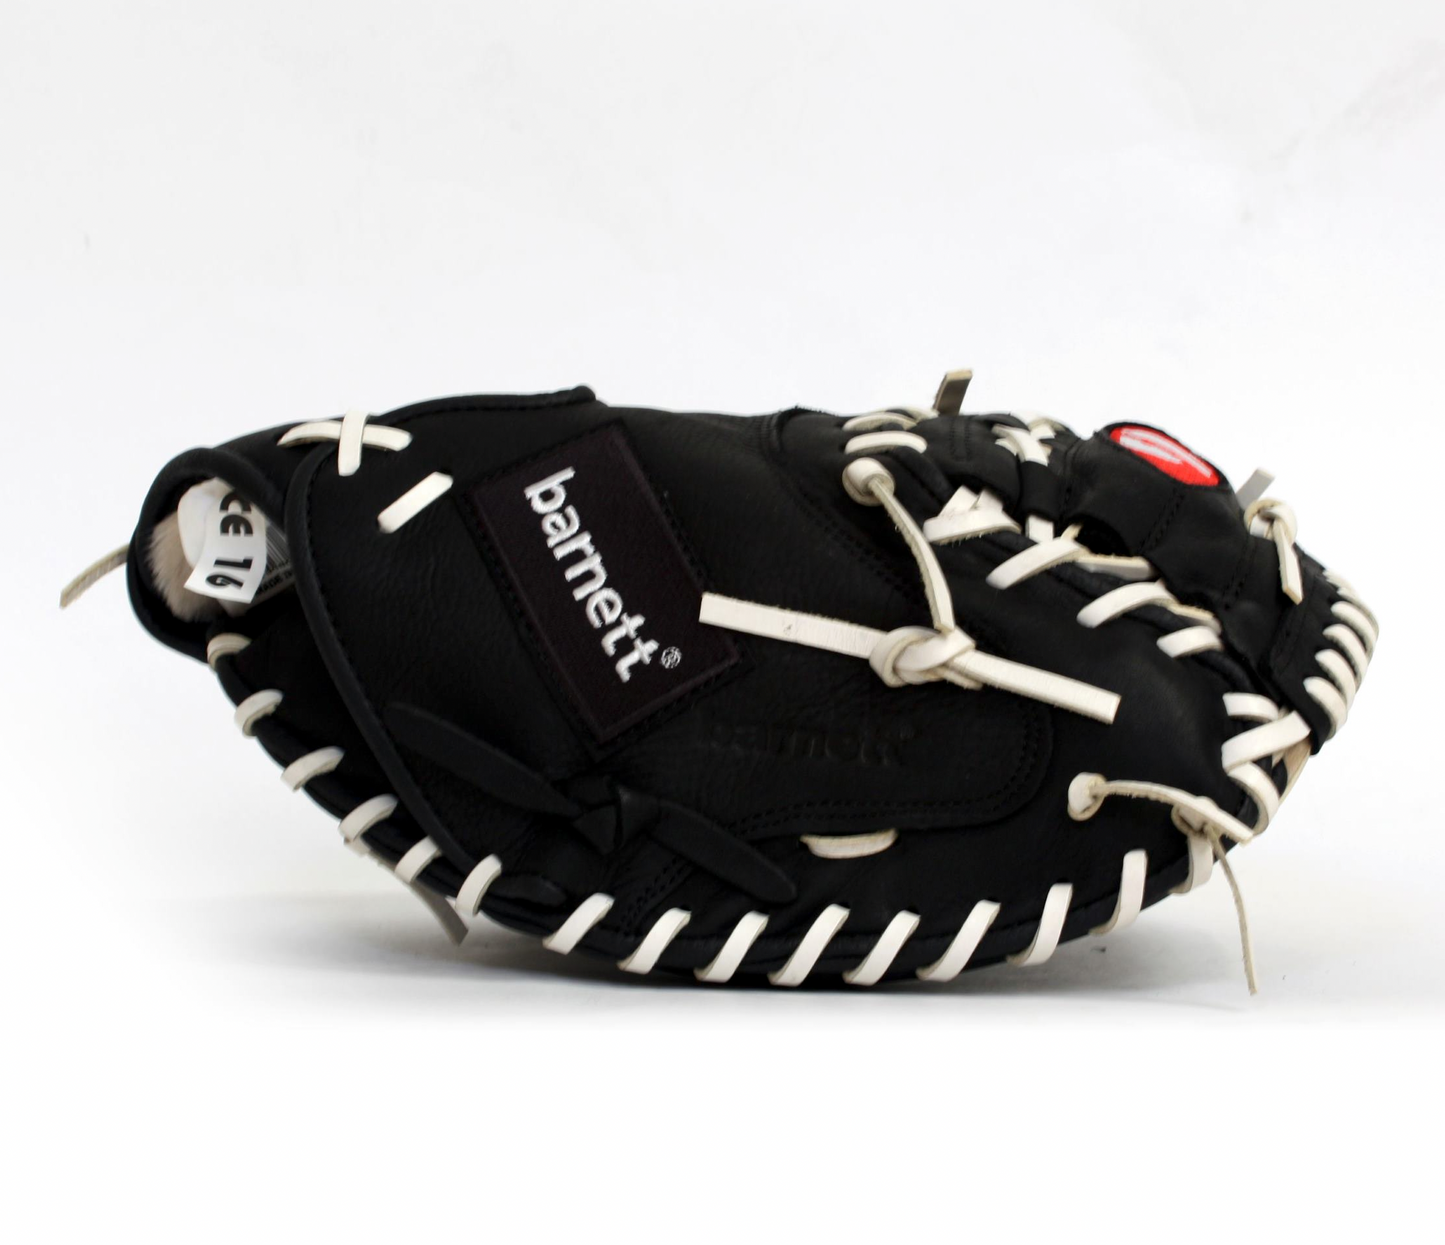 GL-203 Black Adult Catcher Baseball Glove, Leather